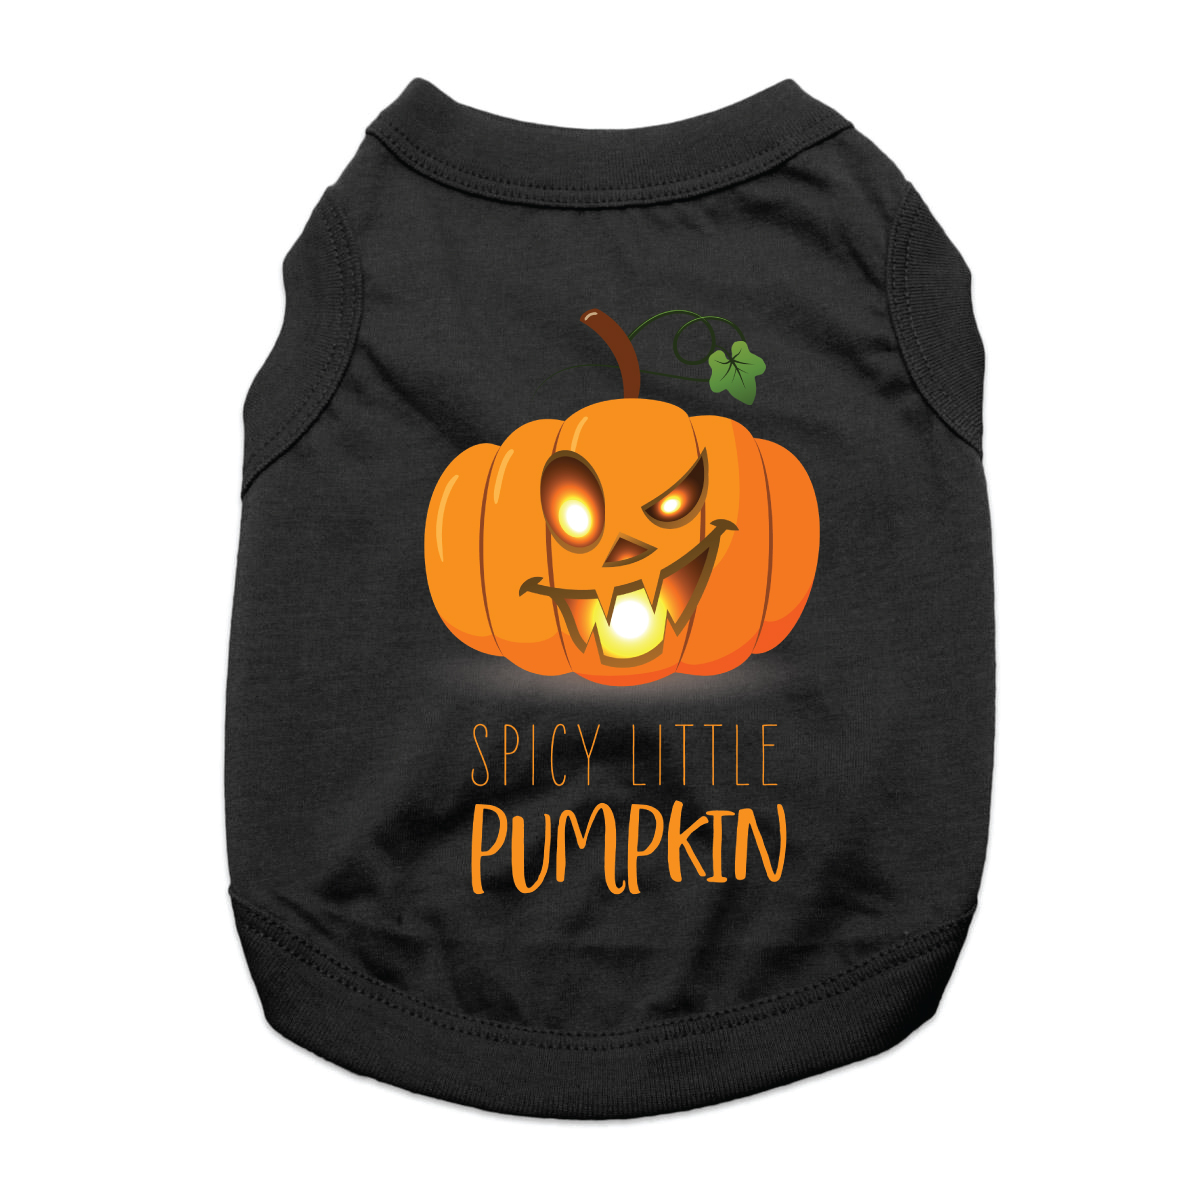 Spicy Little Pumpkin Dog Shirt - Black